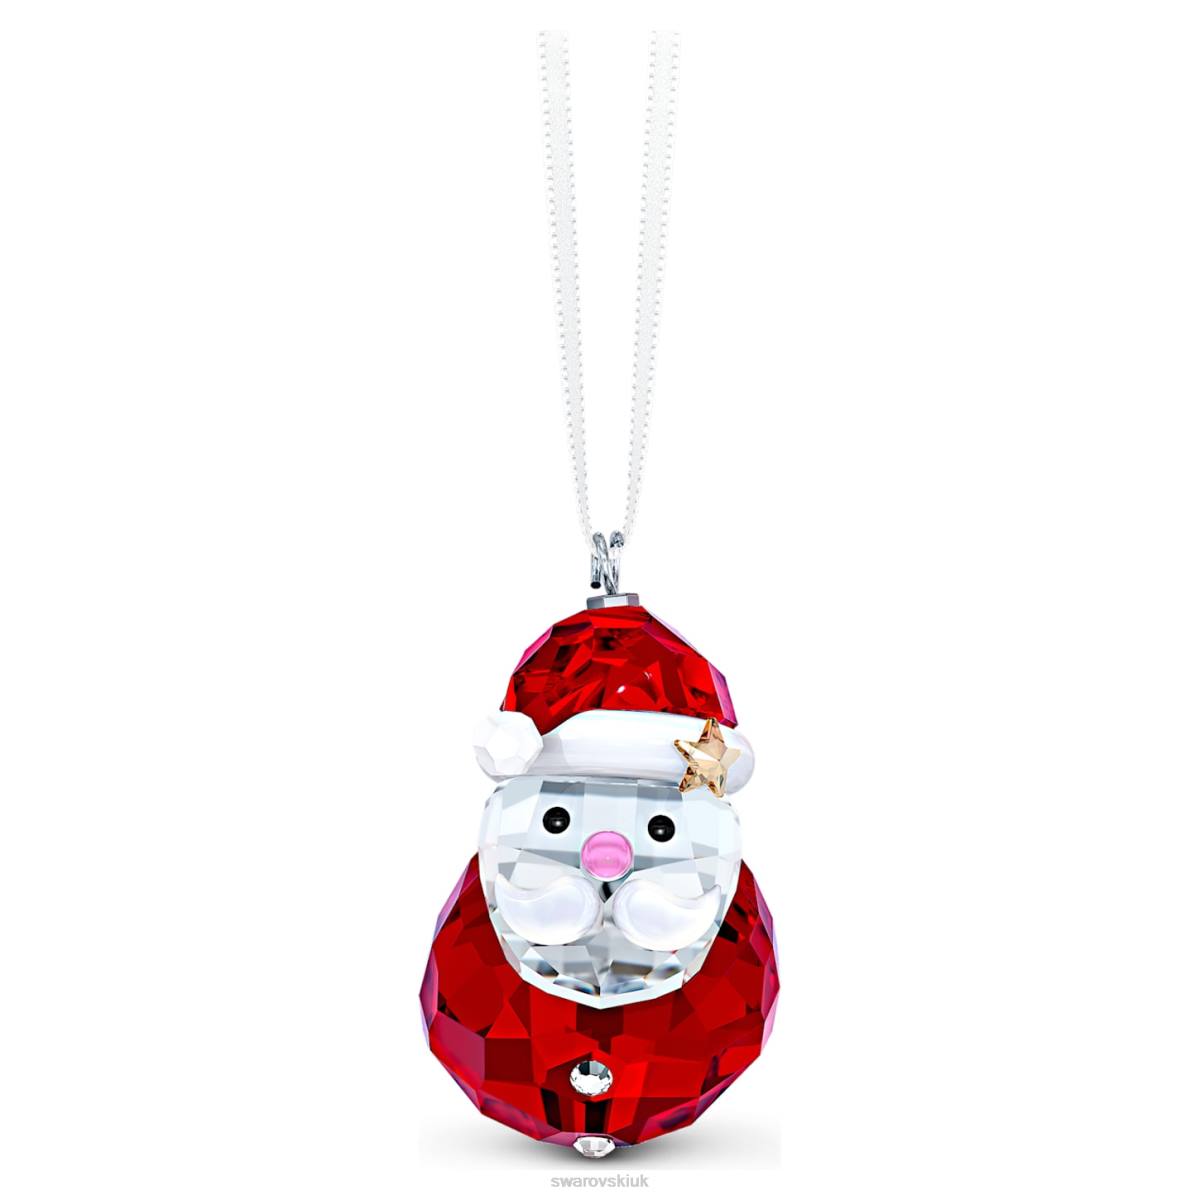 Decorations Swarovski Rocking Santa Claus Ornament Collection 48JX1832